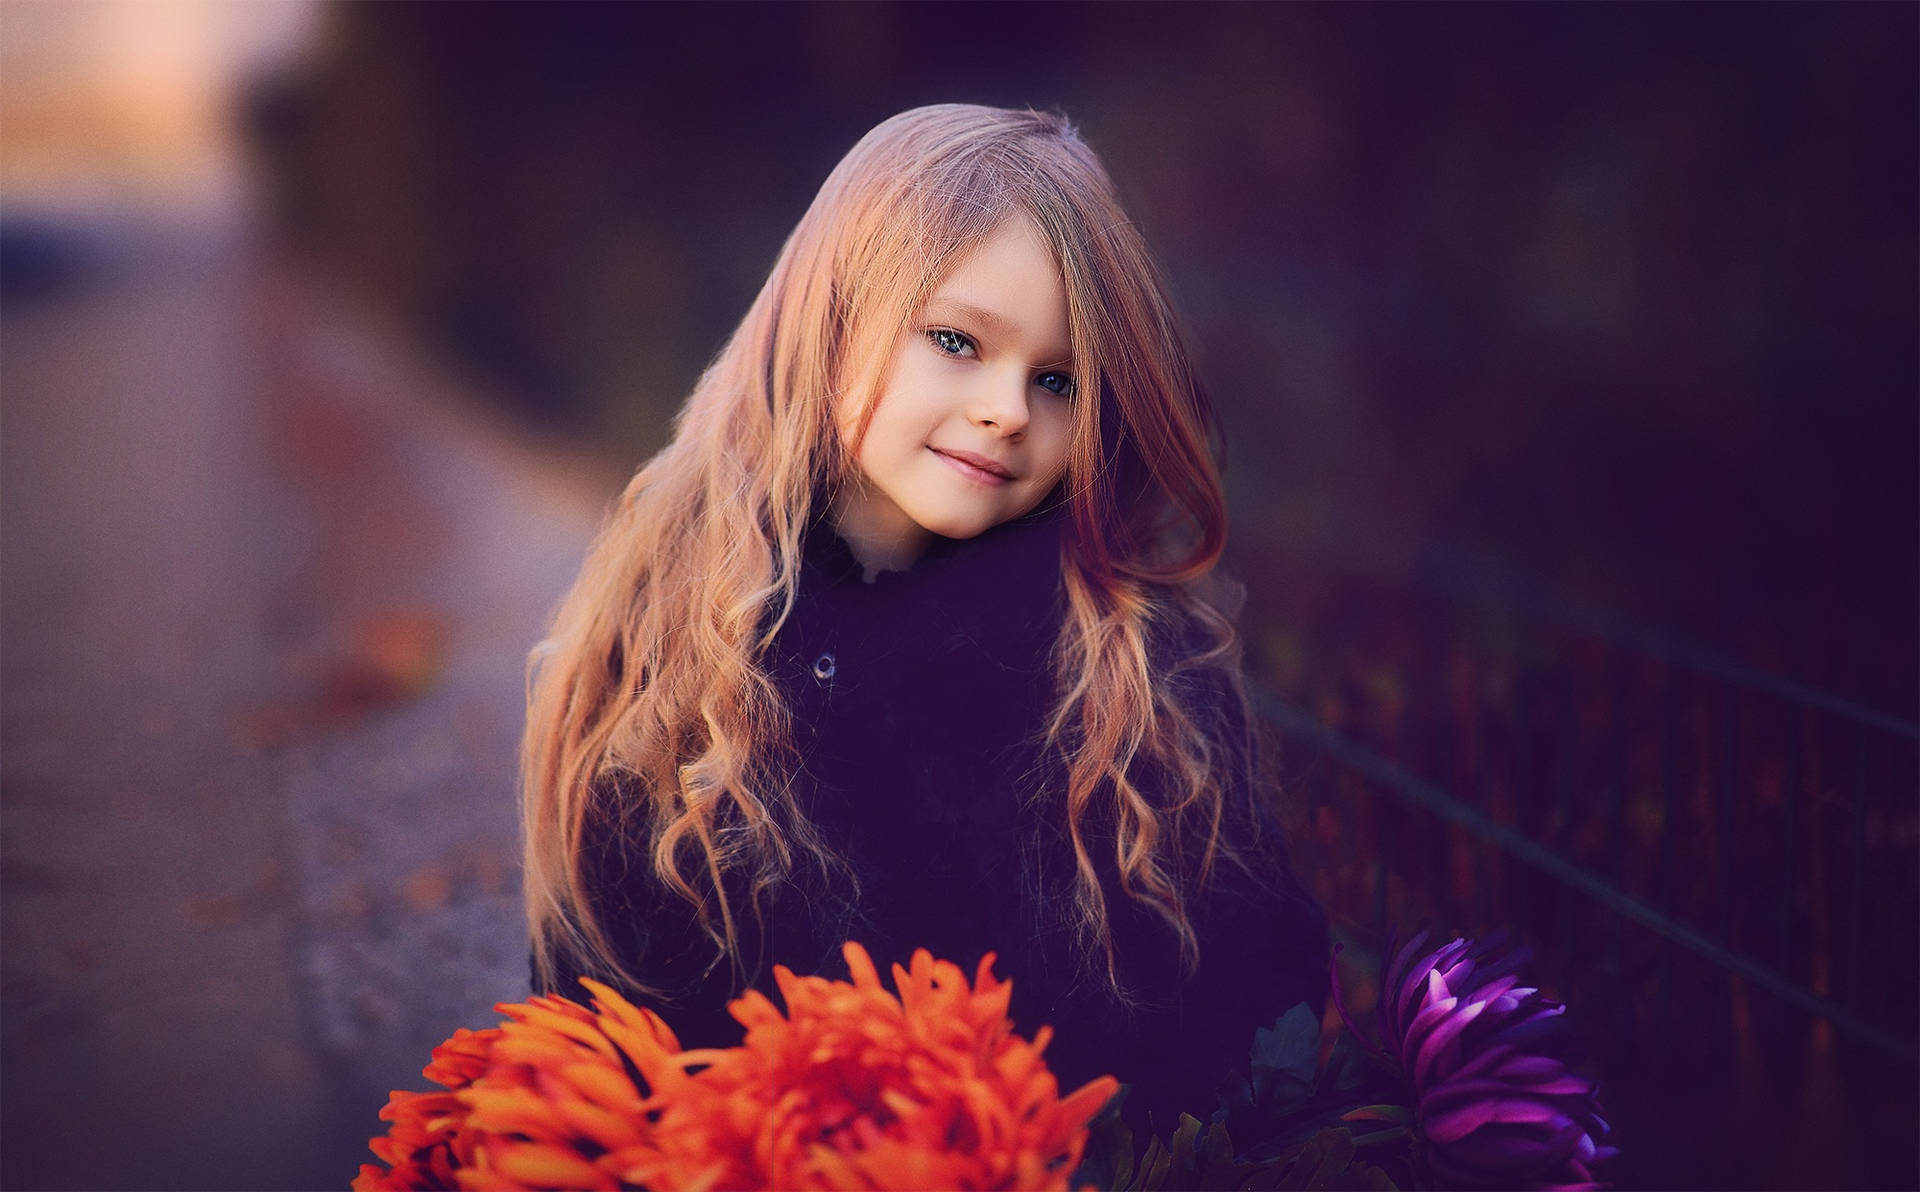 Cute Girl With Orange Flower